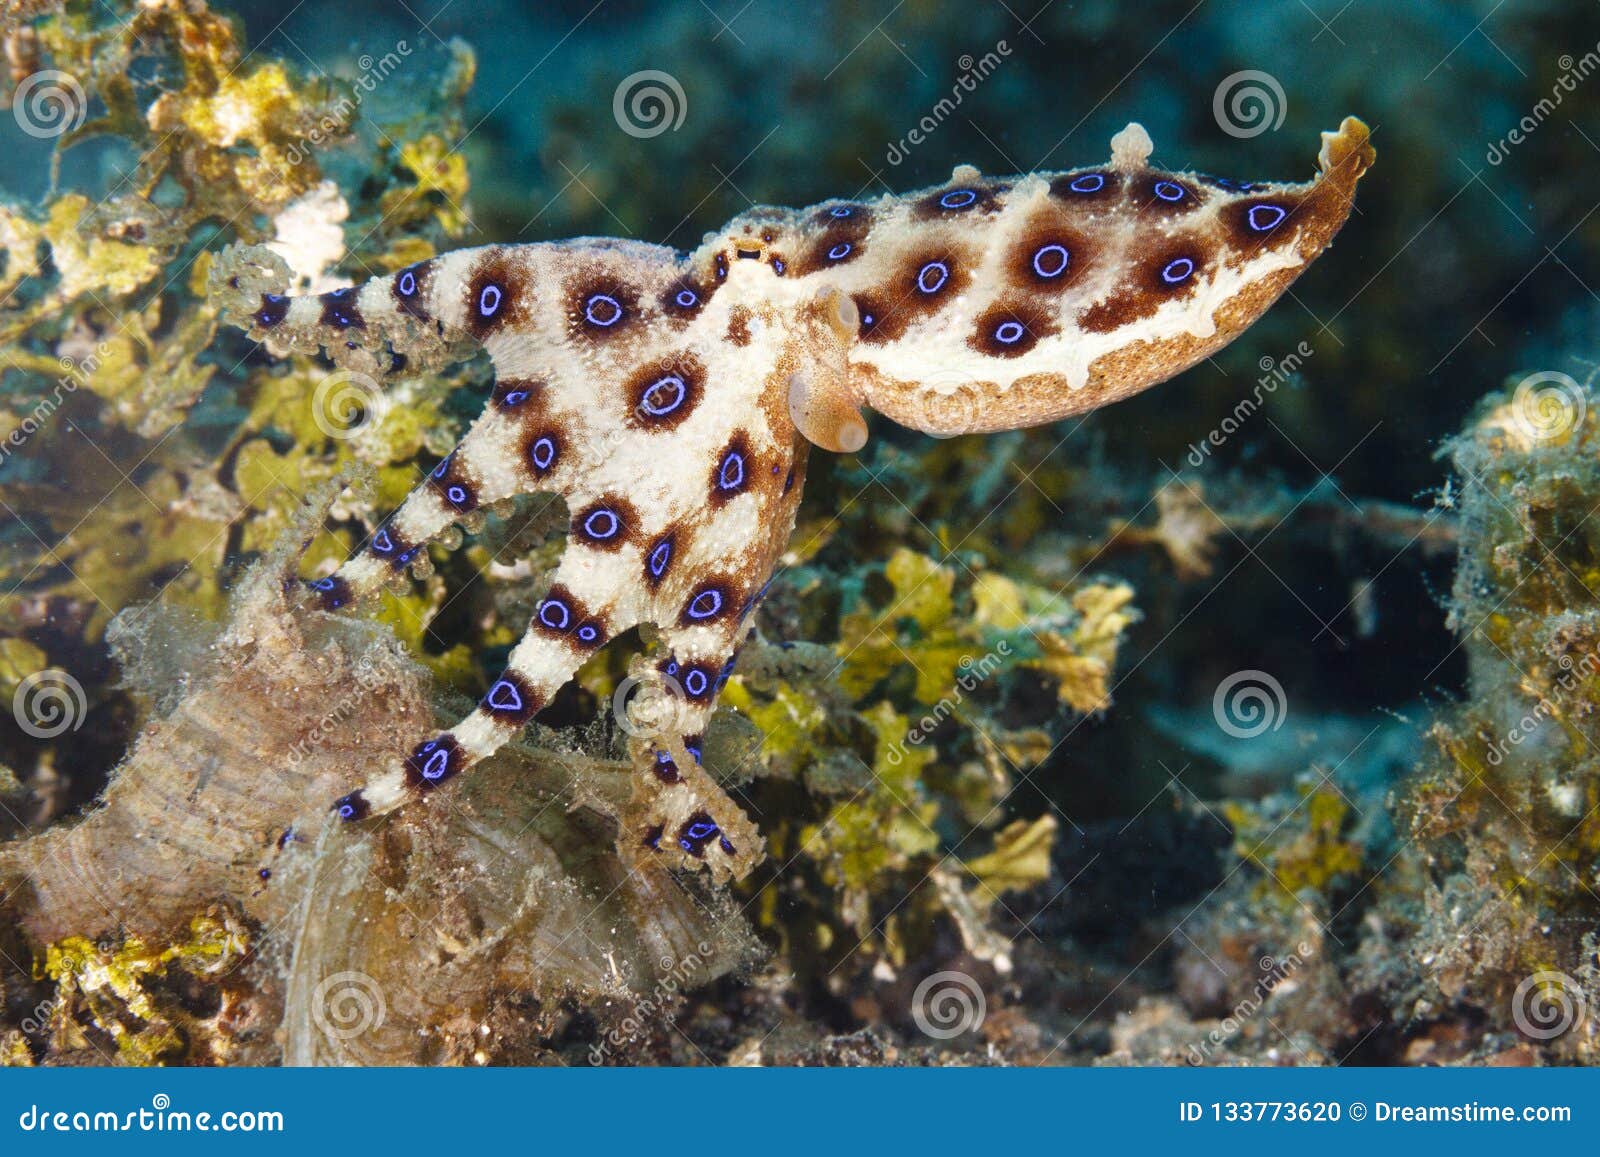 blue ringed octopus on reeftop in lembeh strait, indonesia